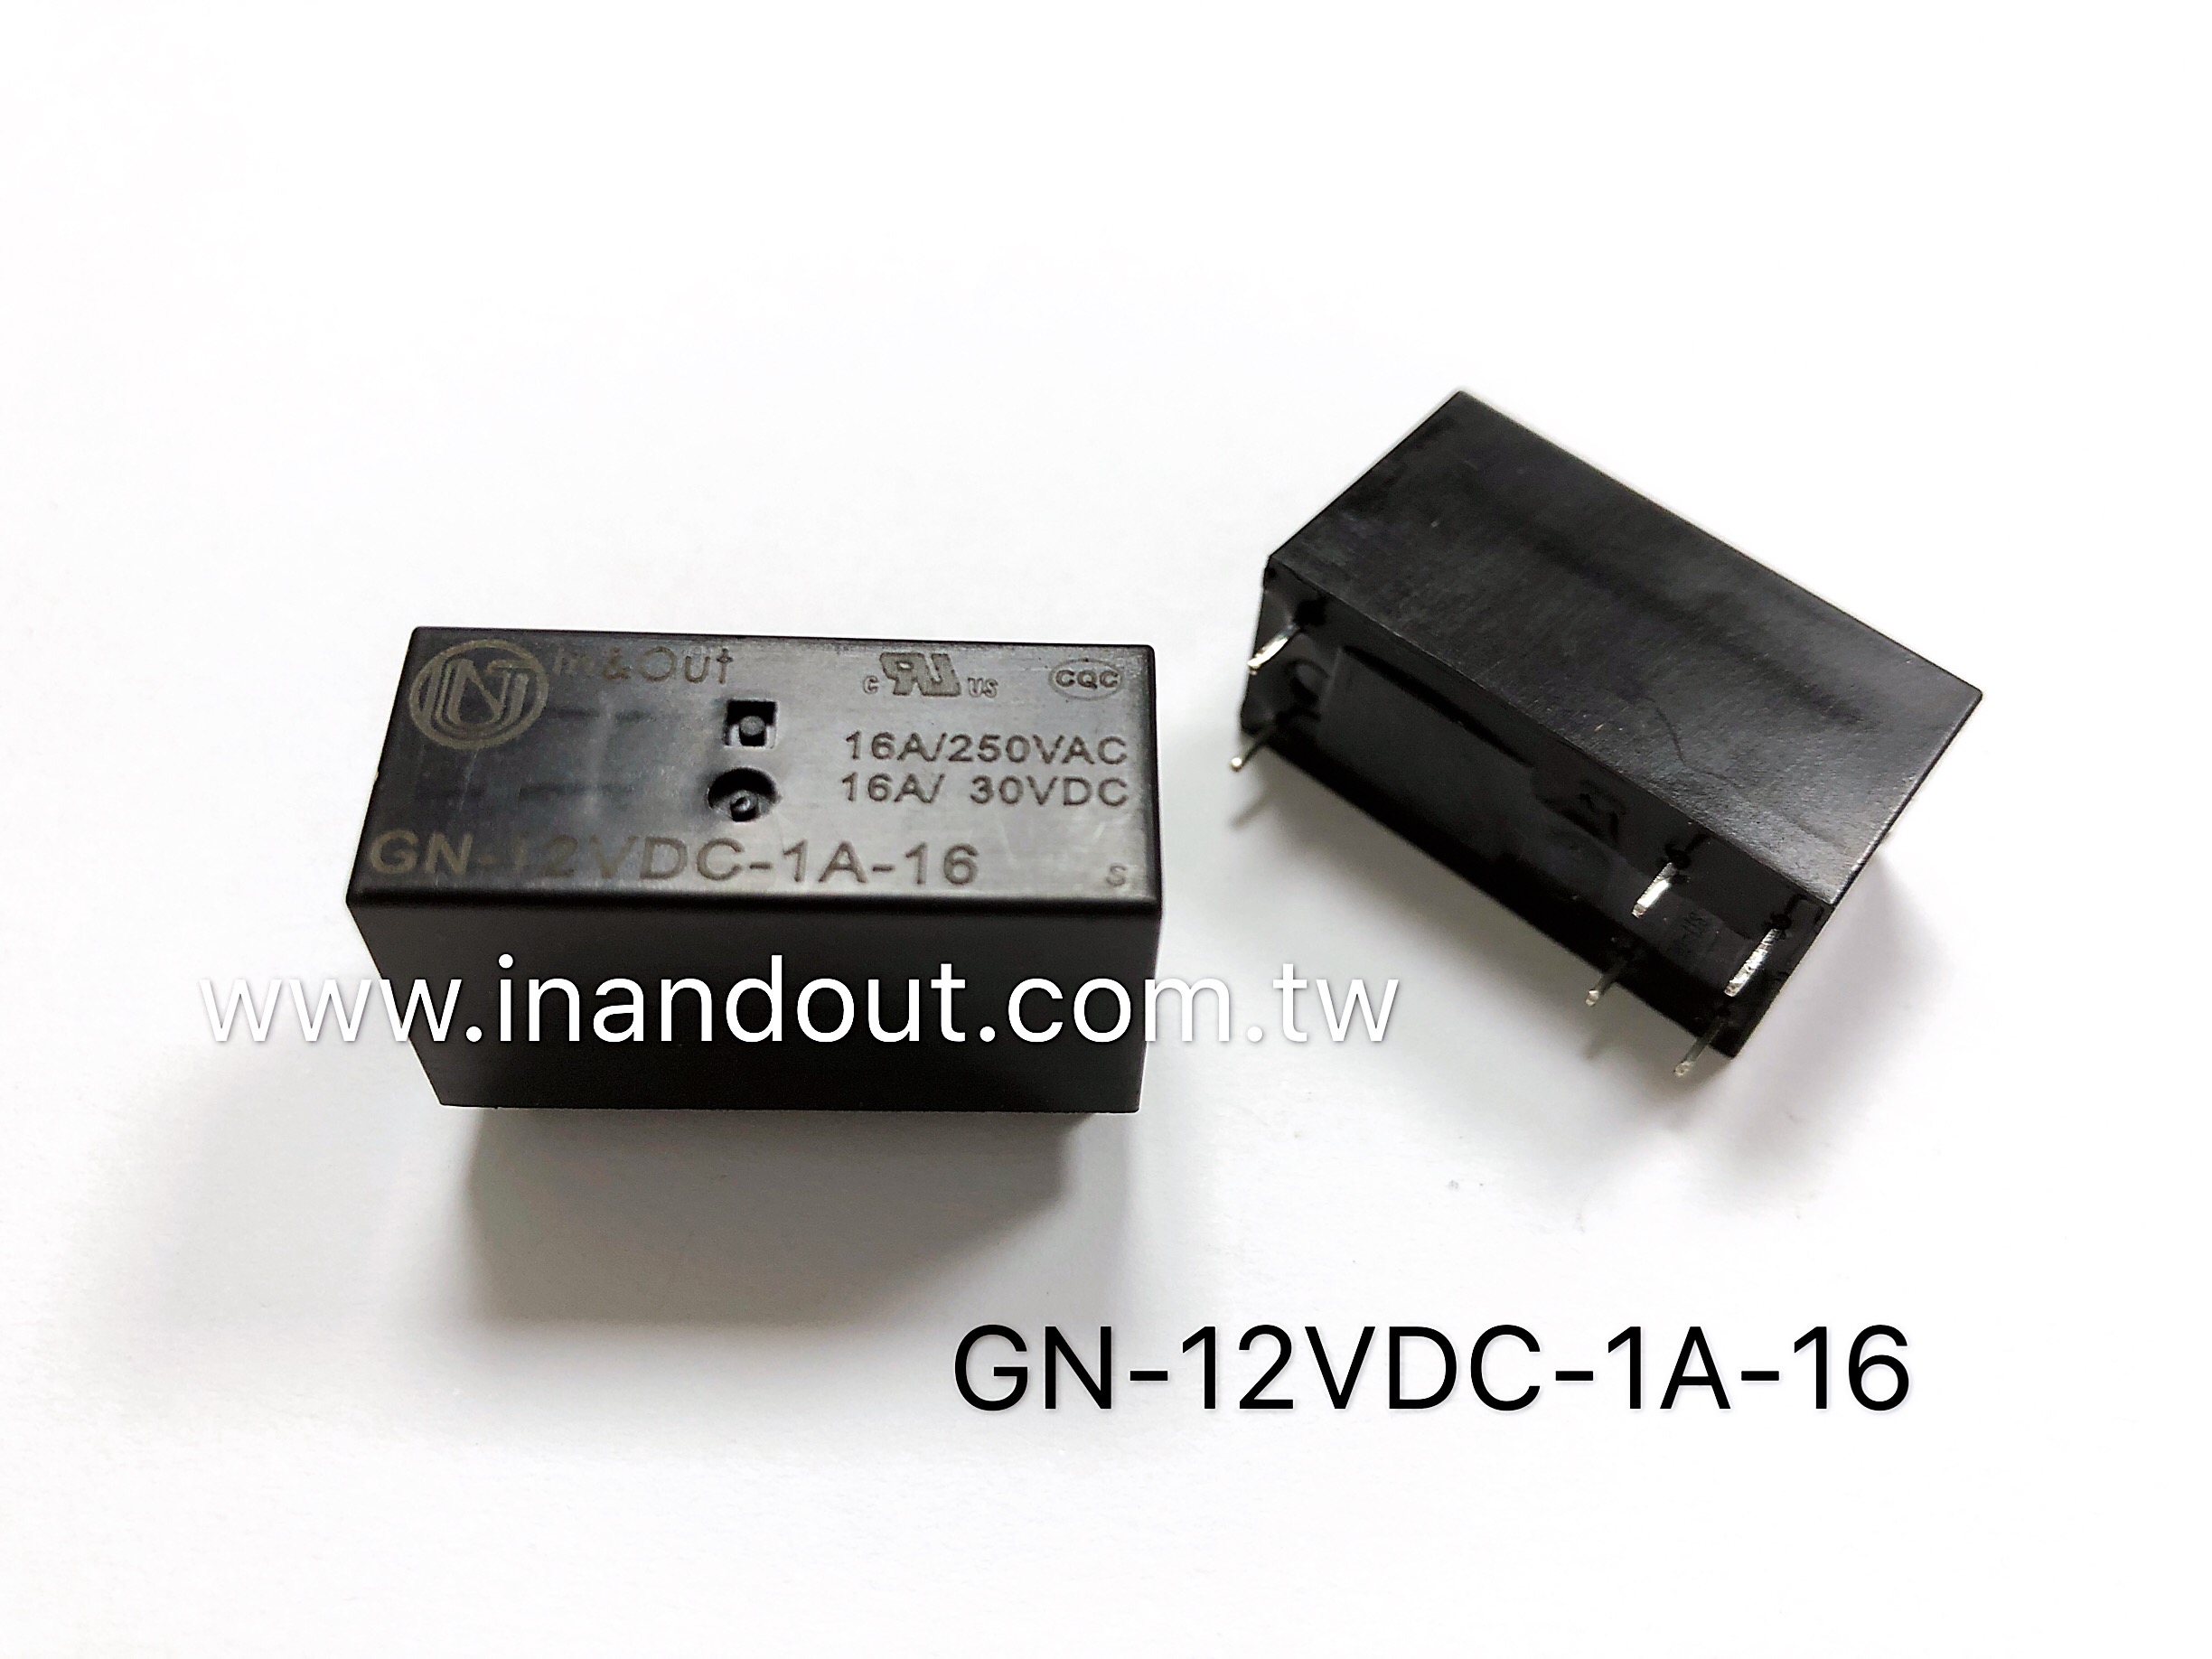 Details about   10Pcs Songchuan 793-P-1A-S-12VDC Power Relay 6 Pins 16A 250VAC